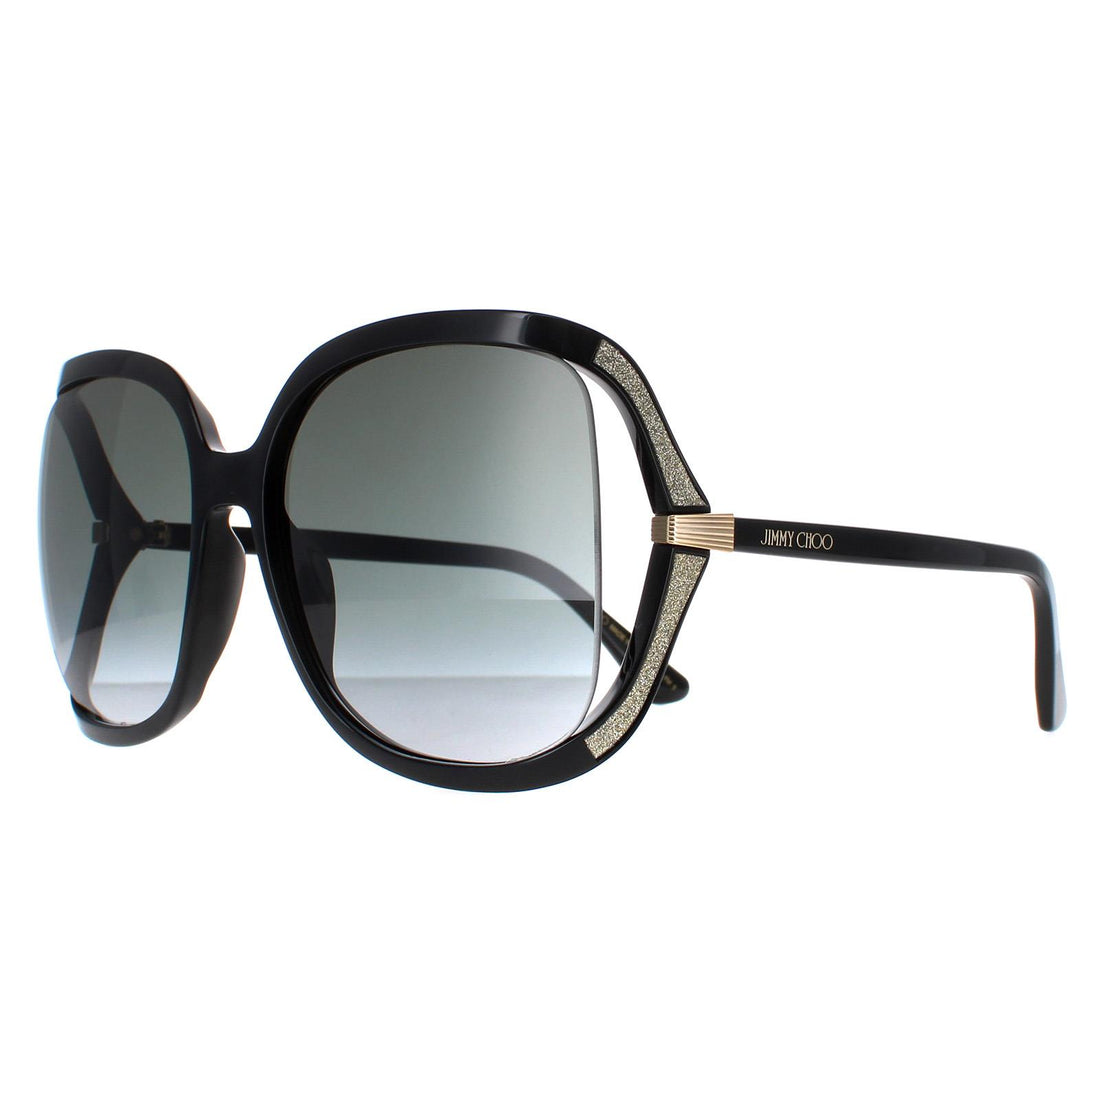 Jimmy Choo Sunglasses TILDA/G/S 807 9O Black Dark Grey Gradient